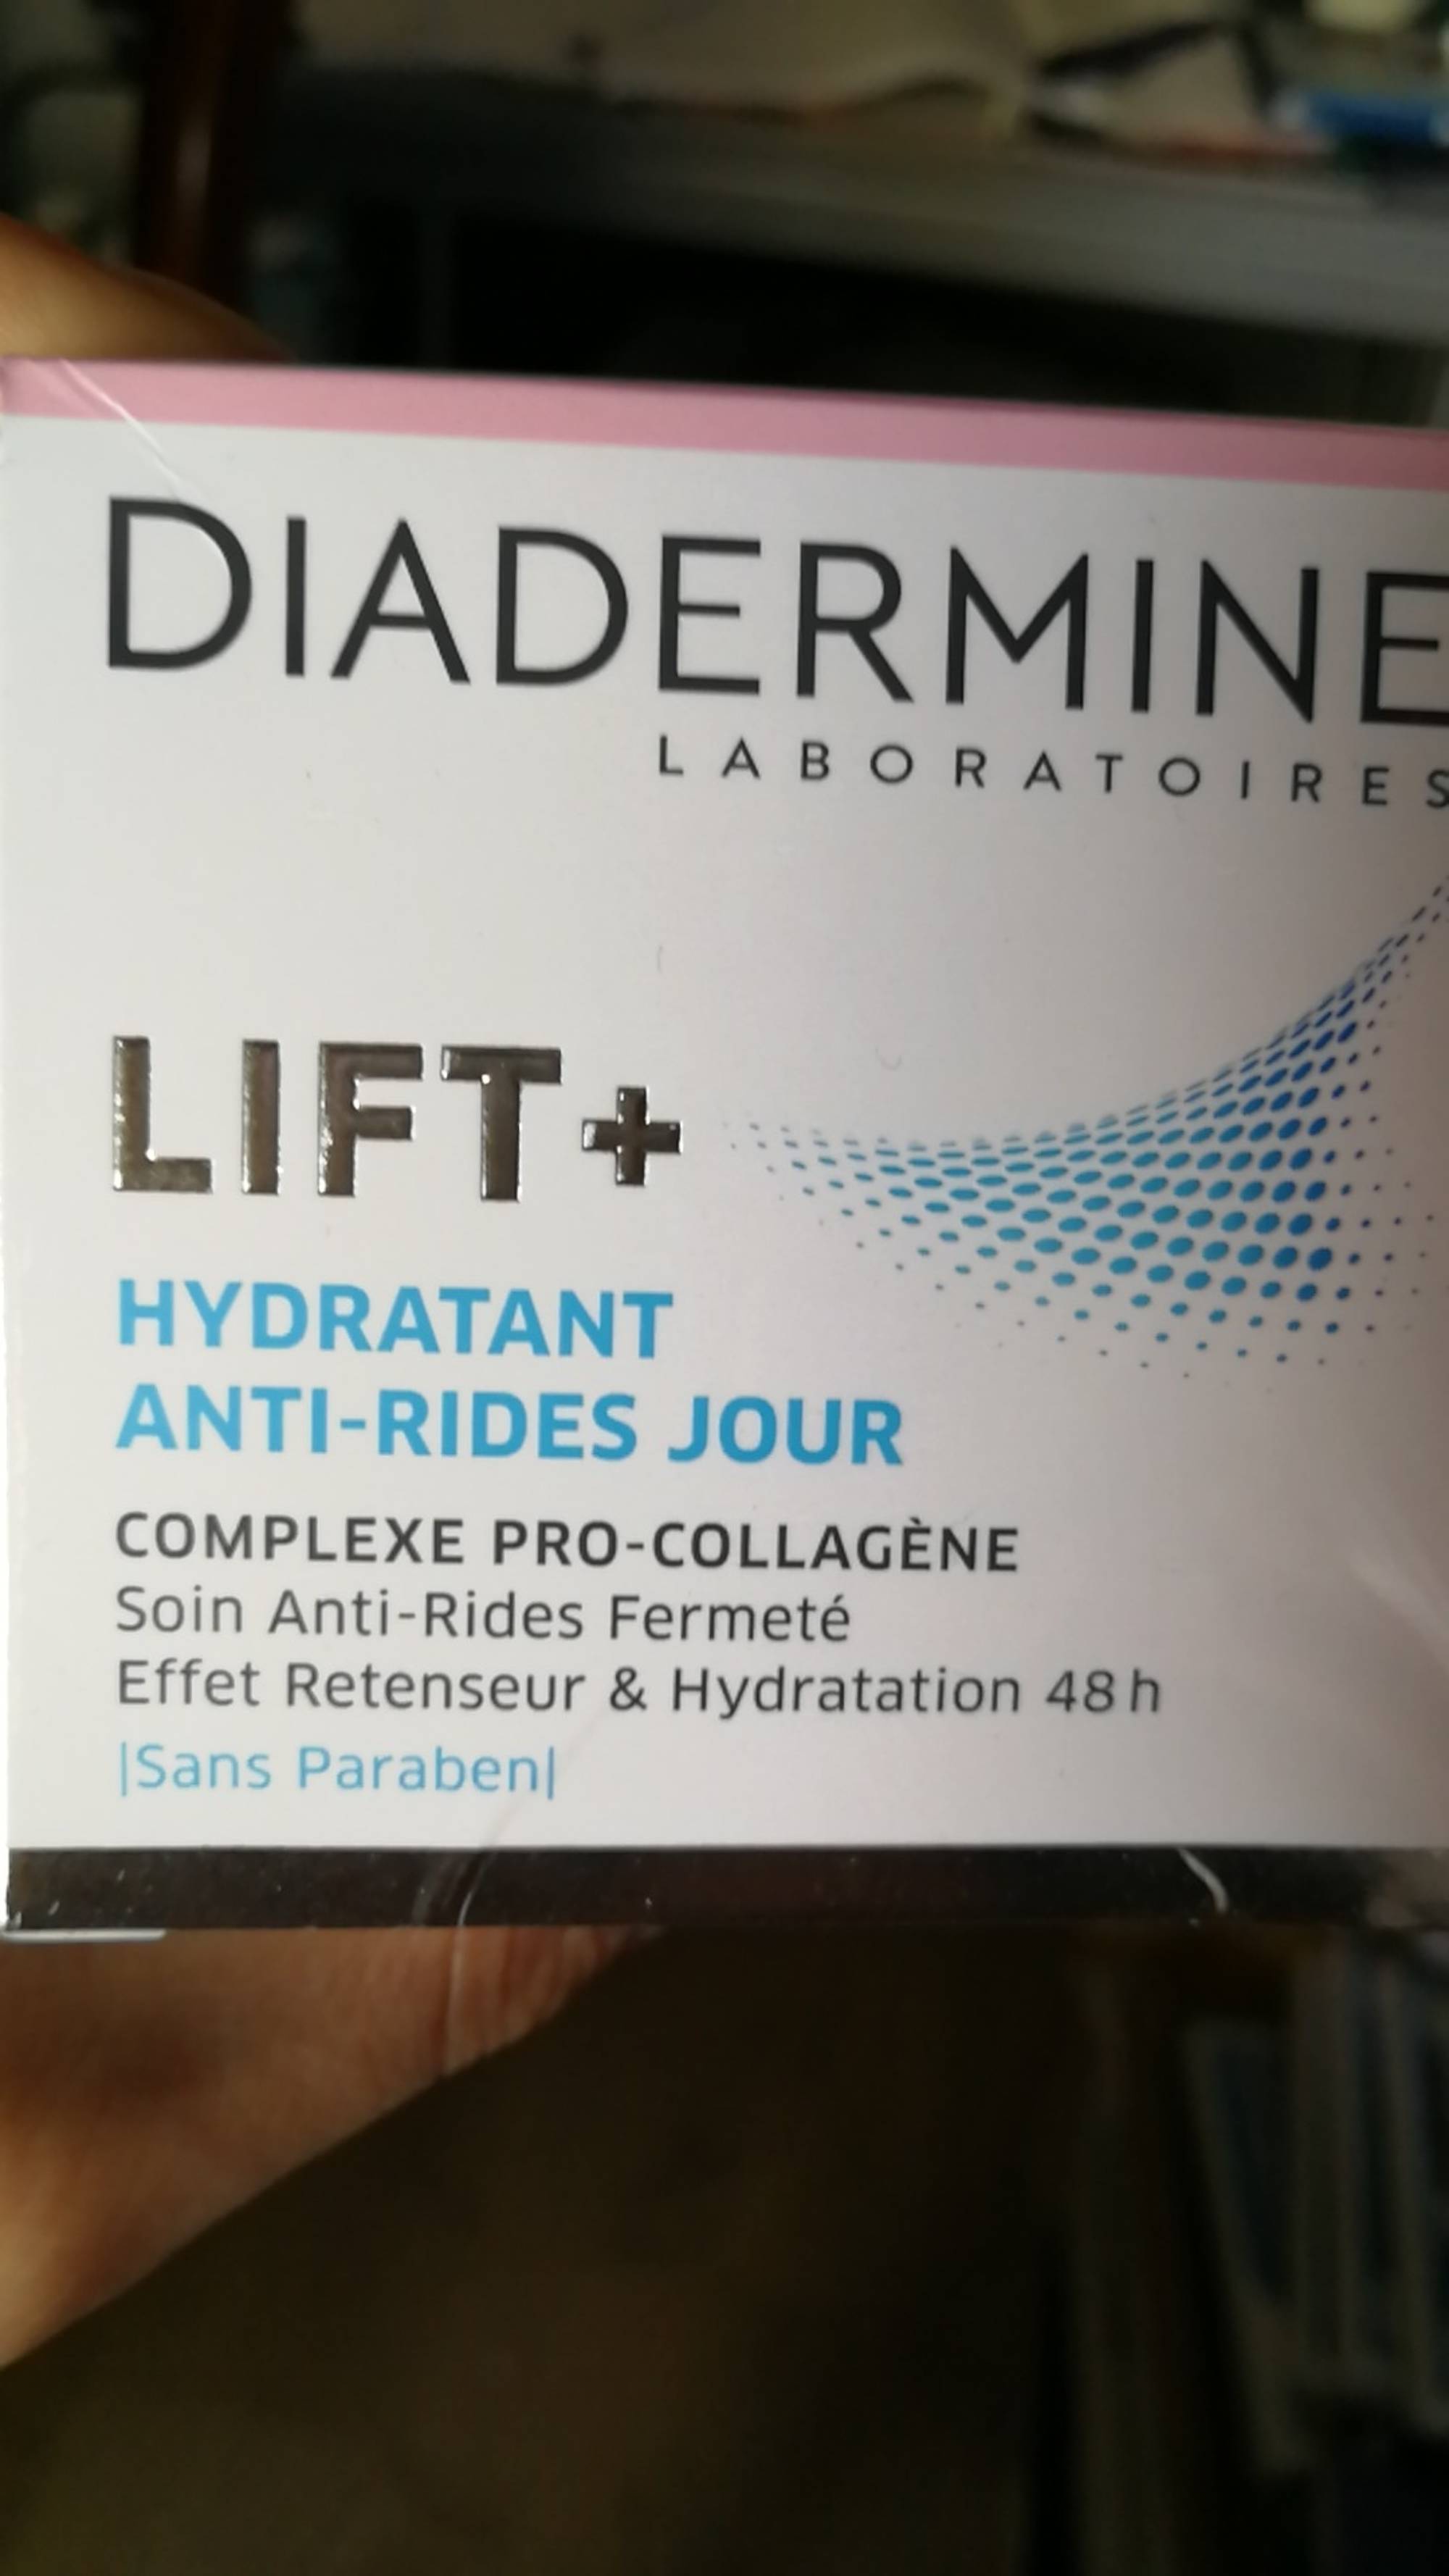 DIADERMINE - Lift+ - Hydratant anti-rides jour